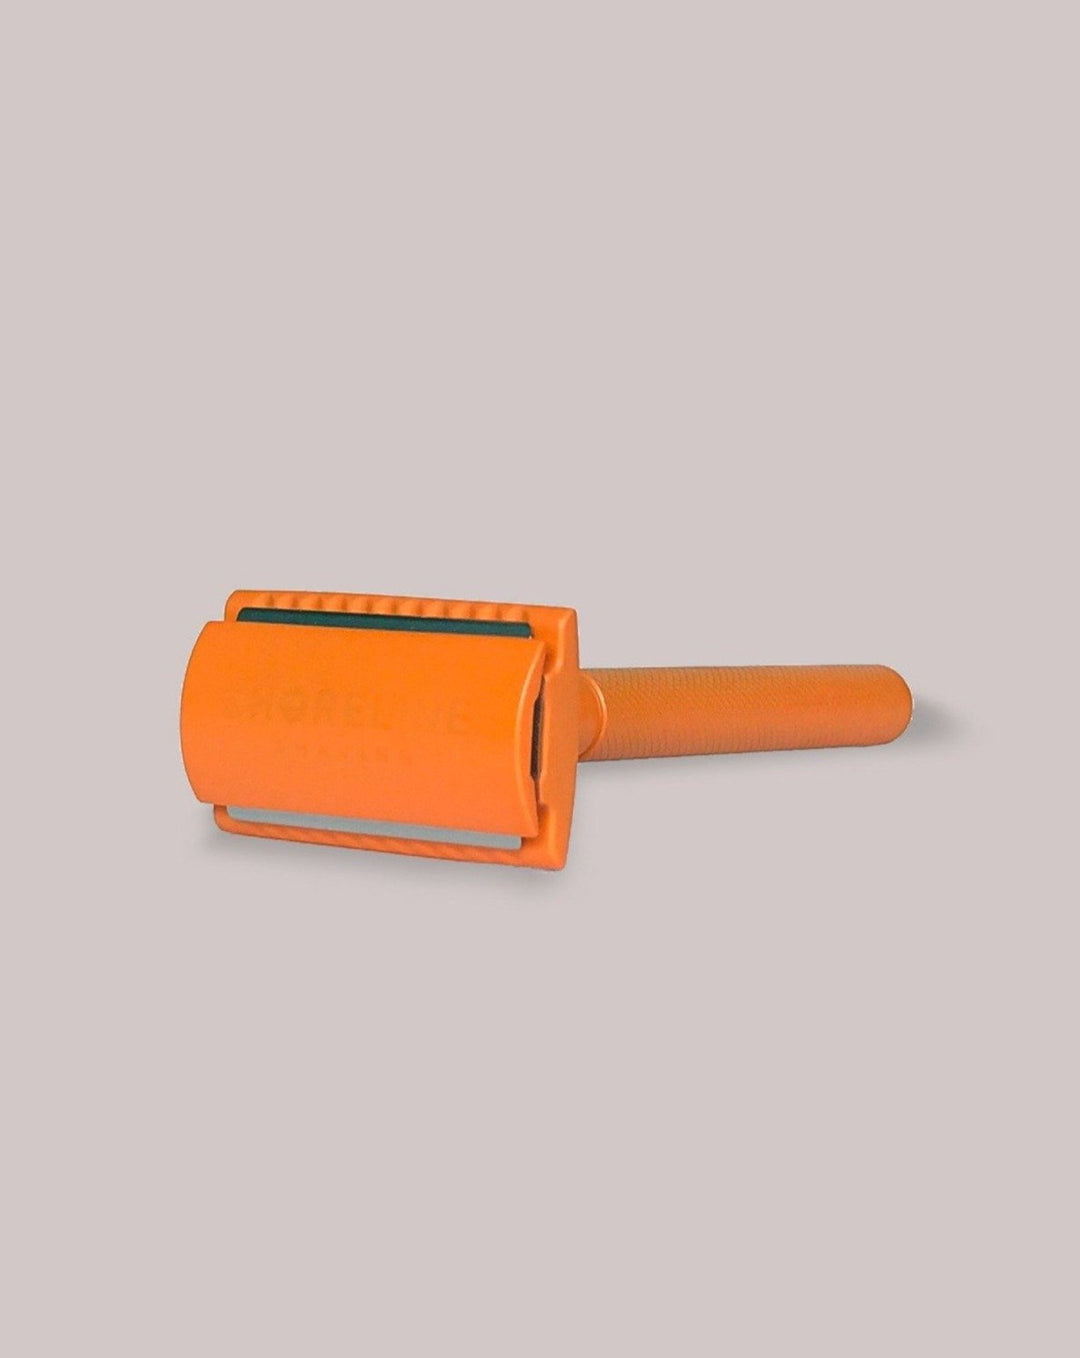 SHORELINE SHAVING SAFETY RAZOR Reusable Safety Razor - Vivid Orange Sustainable Reusable Safety Razor | Vivid Orange | 3133